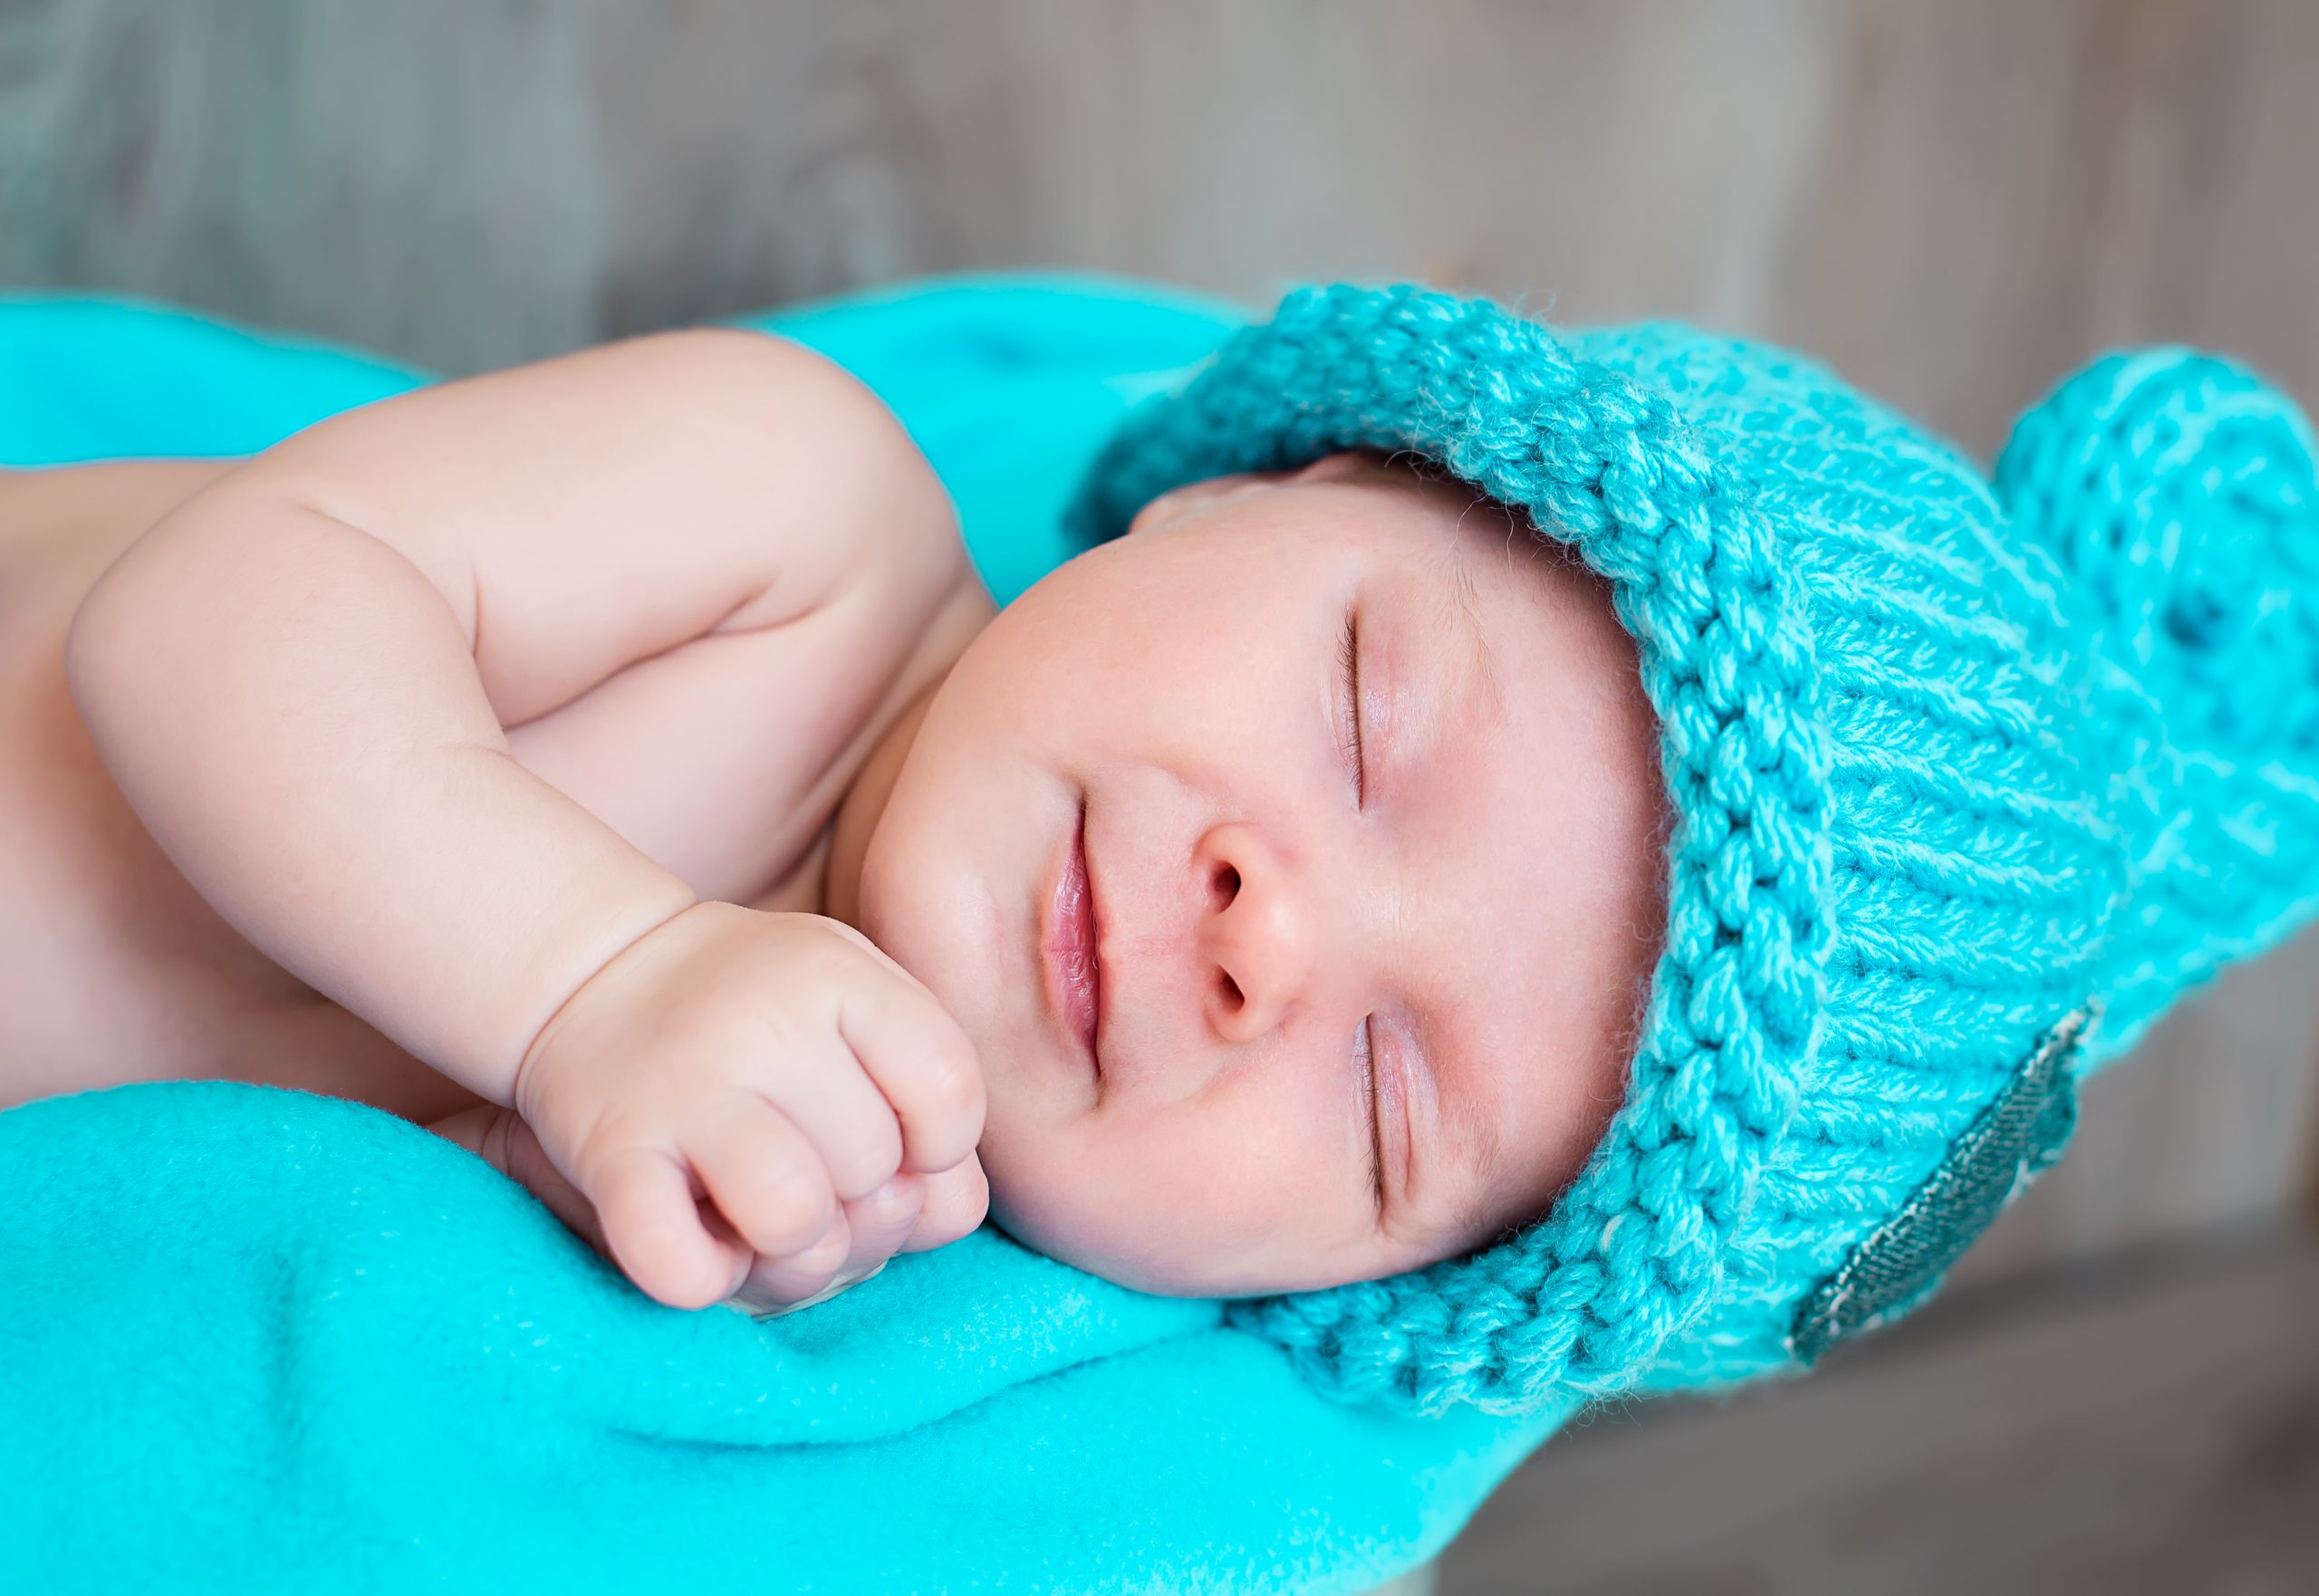 What Should Newborn Wear to Sleep in Winter